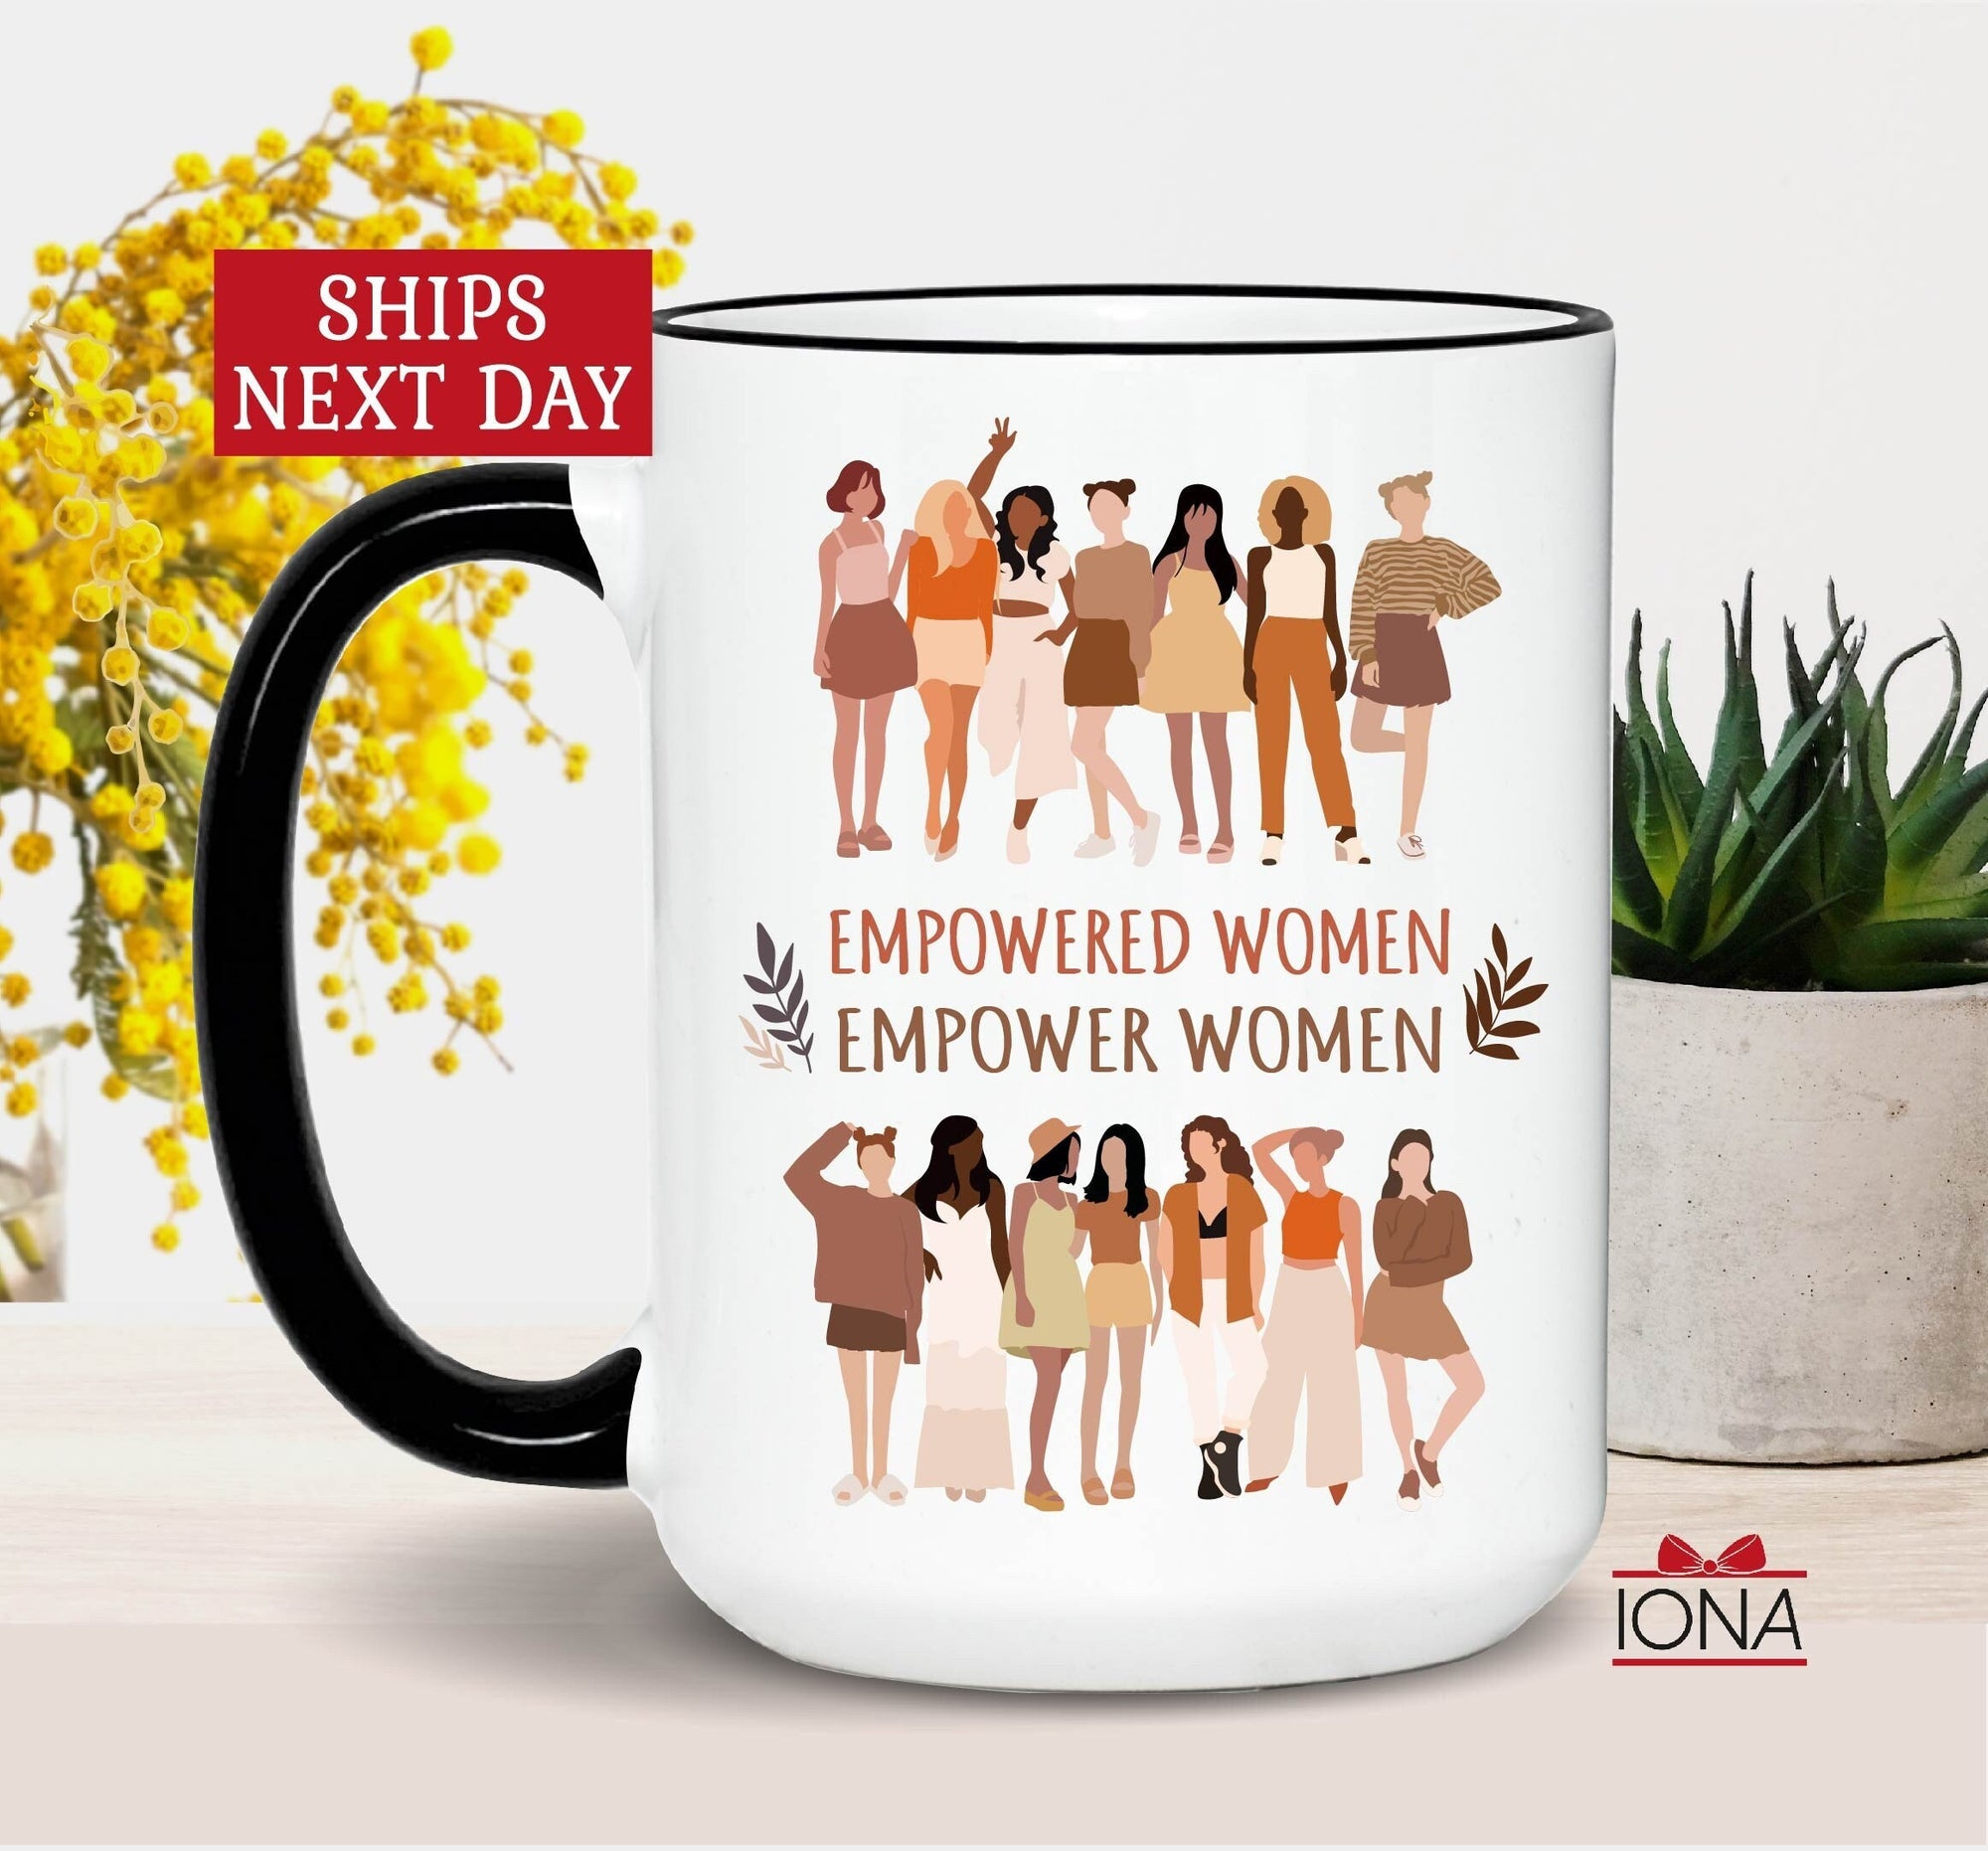 Empowered Women Empower Women mug, Feminist gift, Mugs for Women, Gifts for Her, Best Friend Gift, Feminism, Motivational, Inspirational